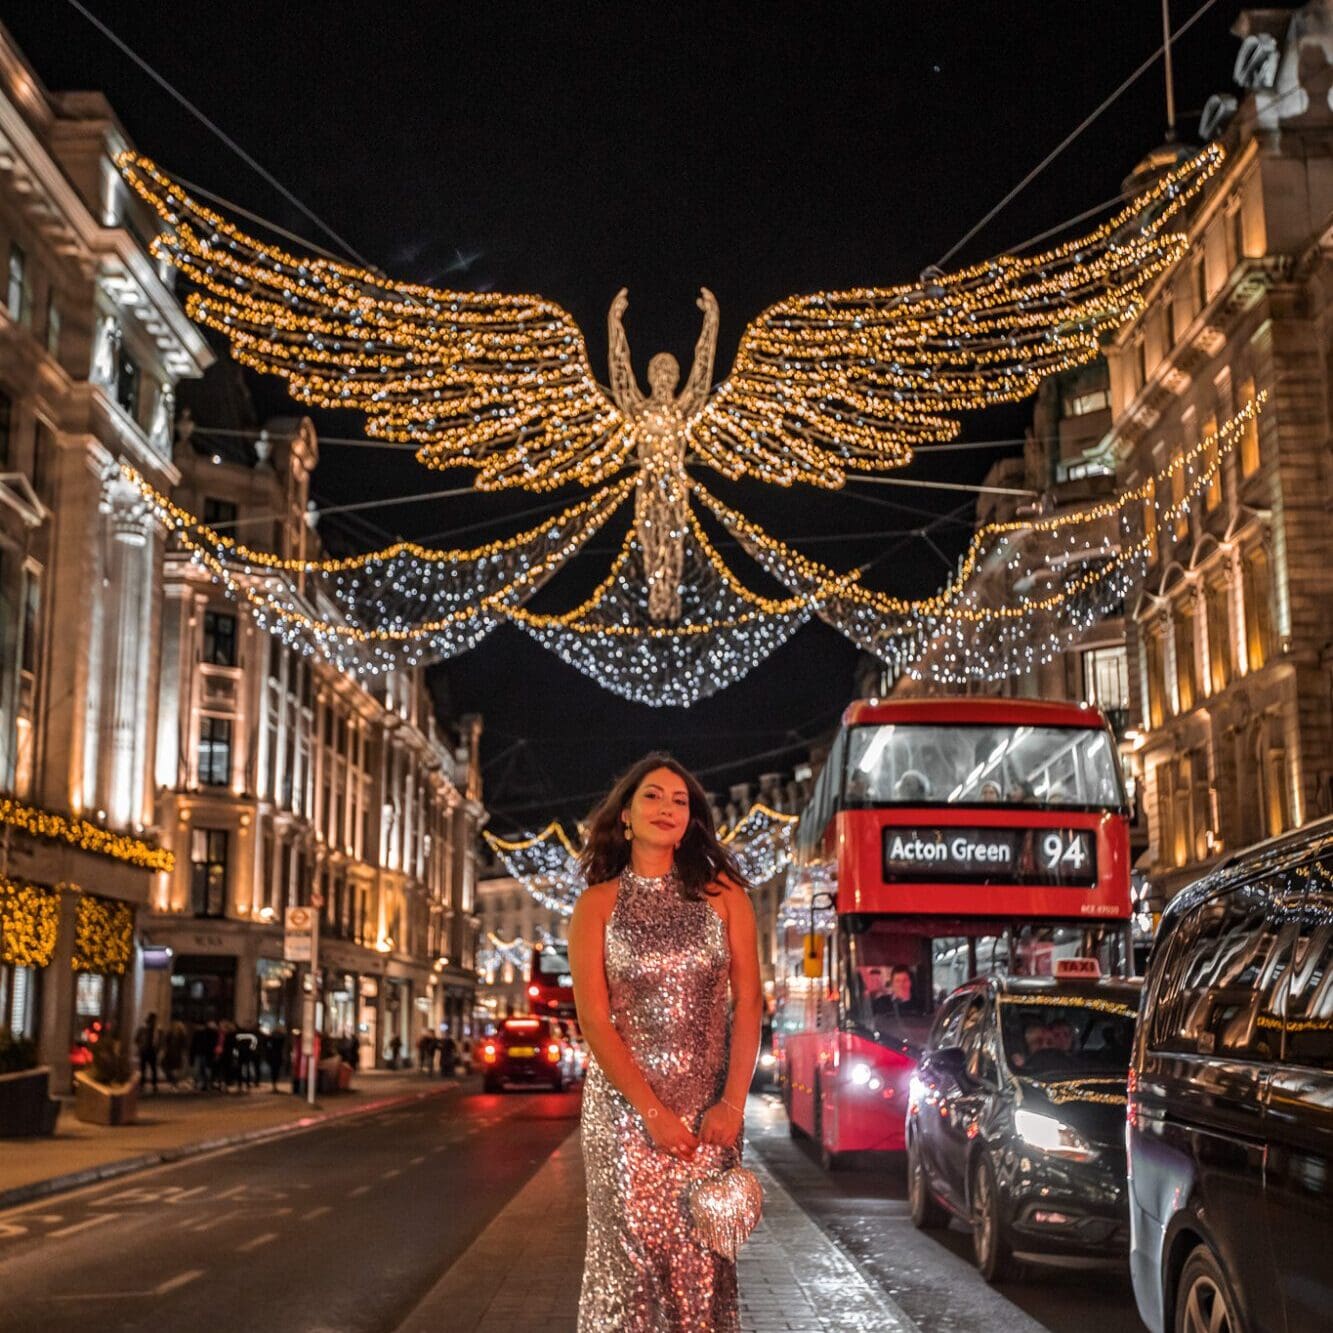 Regent Street Christmas Lights London